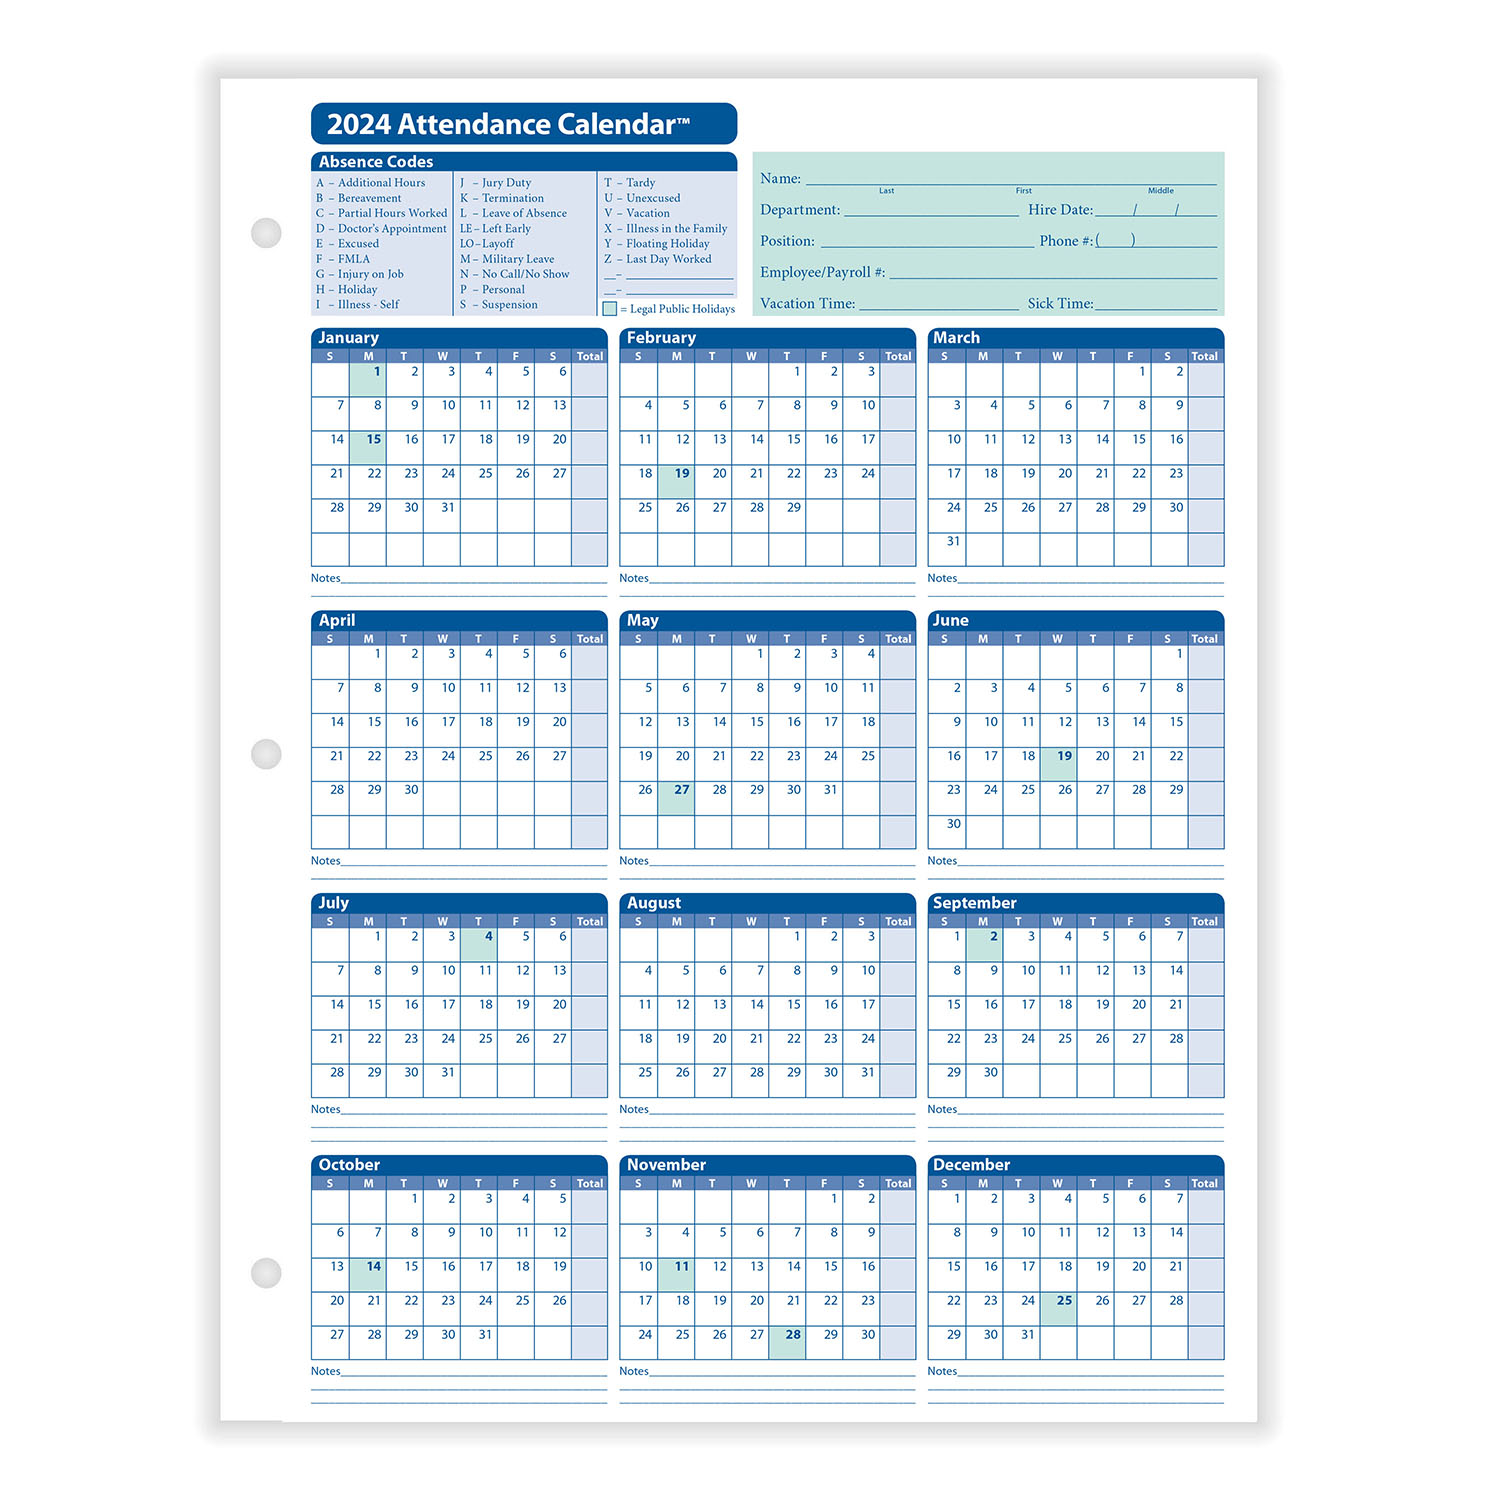 2024 Yearly Employee Attendance Calendar | Yearly Calendar | Hrdirect with regard to Employee Attendance Calendar 2024 Template